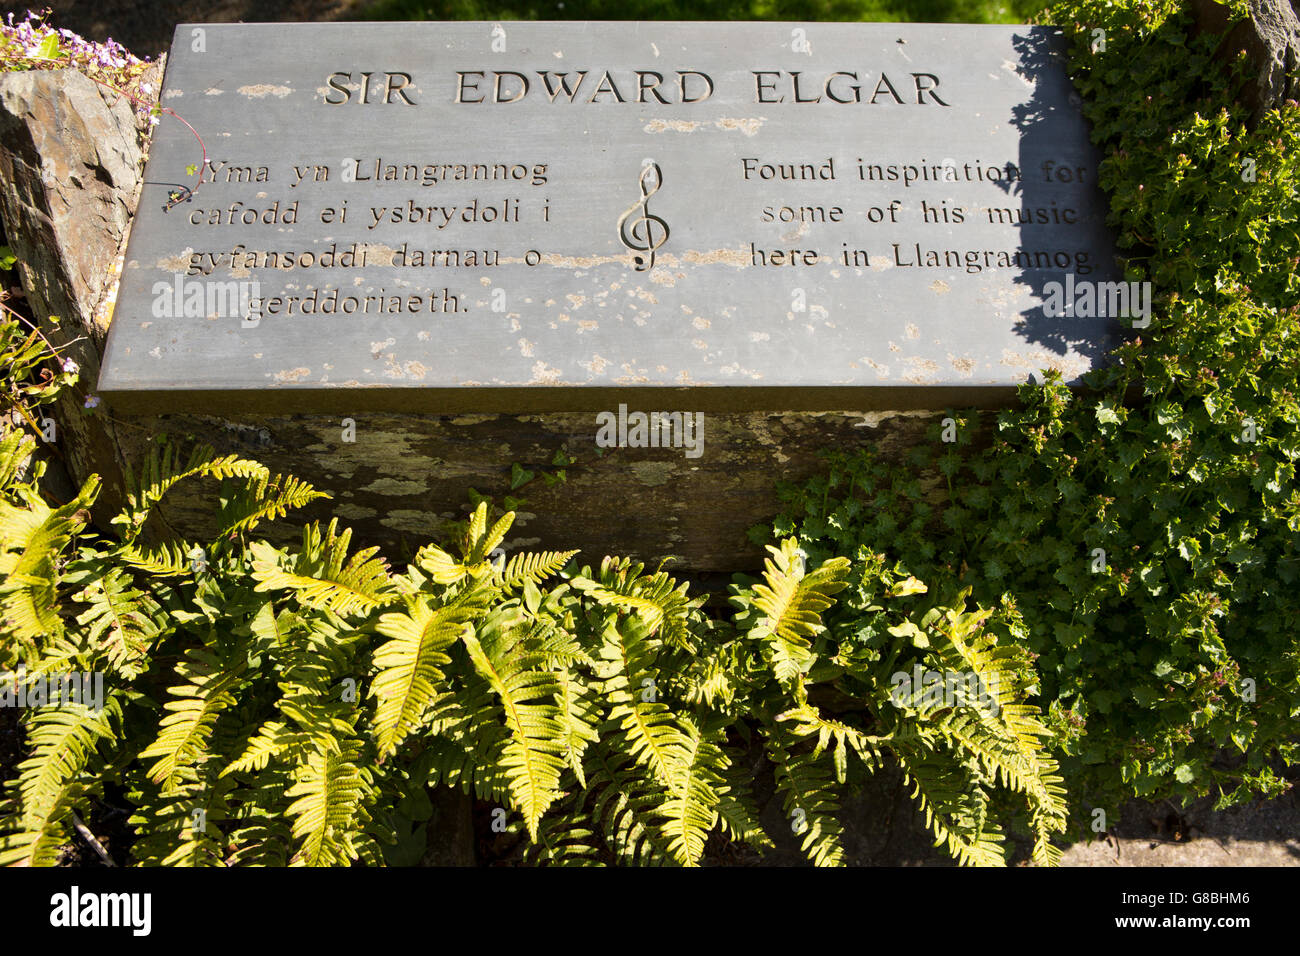 Großbritannien, Wales, Ceredigion, Llangrannog, Dorf Garten, Sir Edward Elgar Gedenktafel Stockfoto